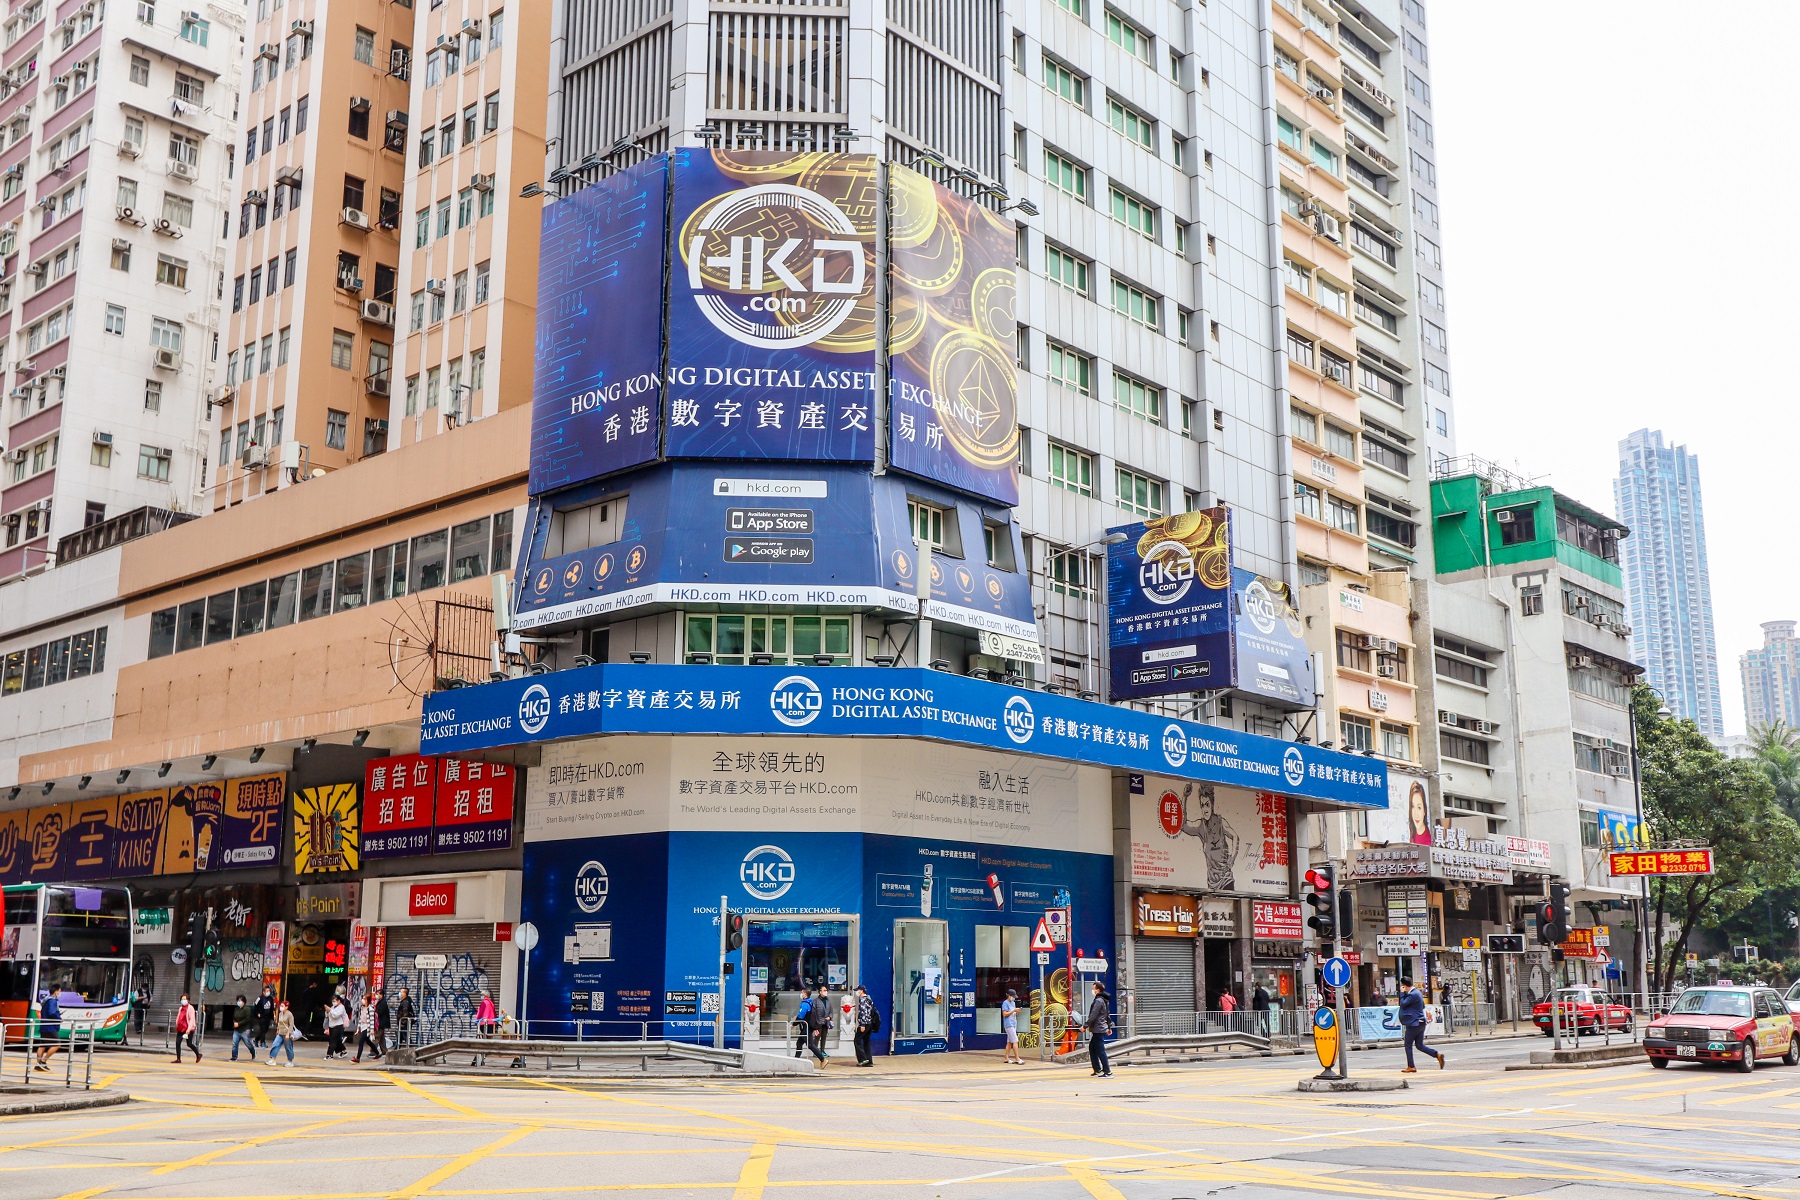 Hong Kong Digital Asset Exchange HKD.com Plans to Open Up the Thai Market